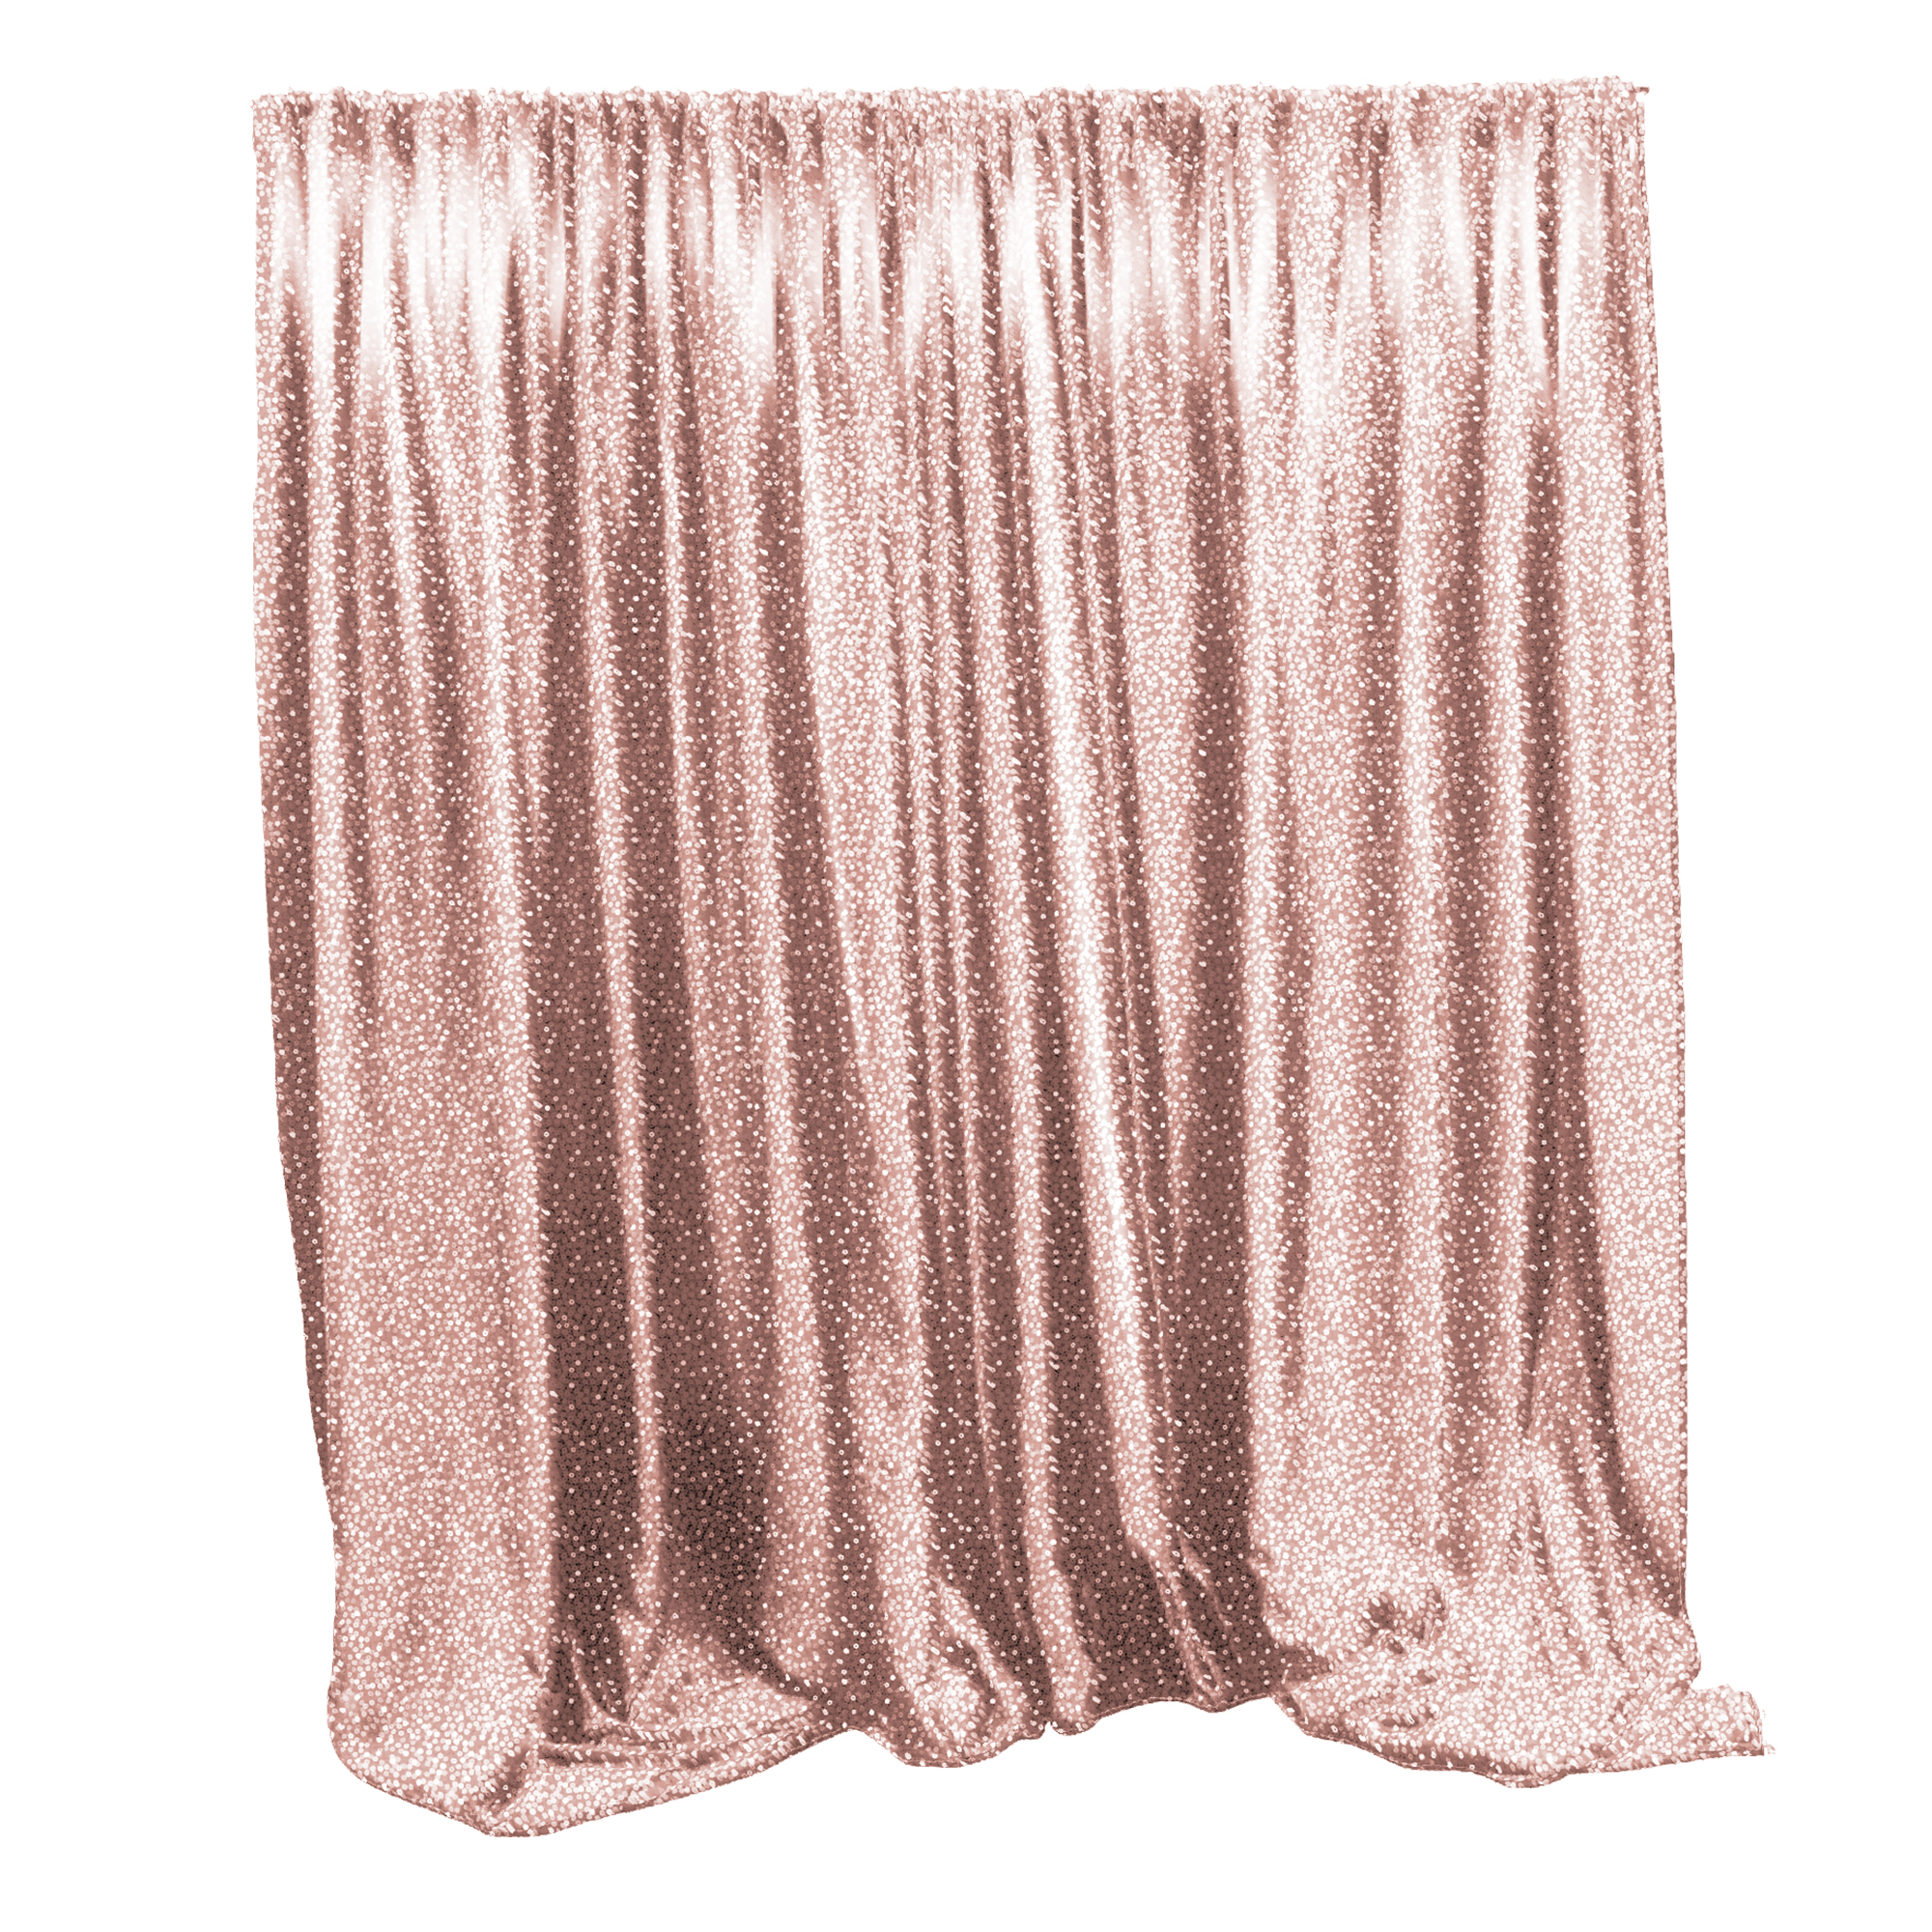 Sequin Backdrop 20ft x 10ft - Blush